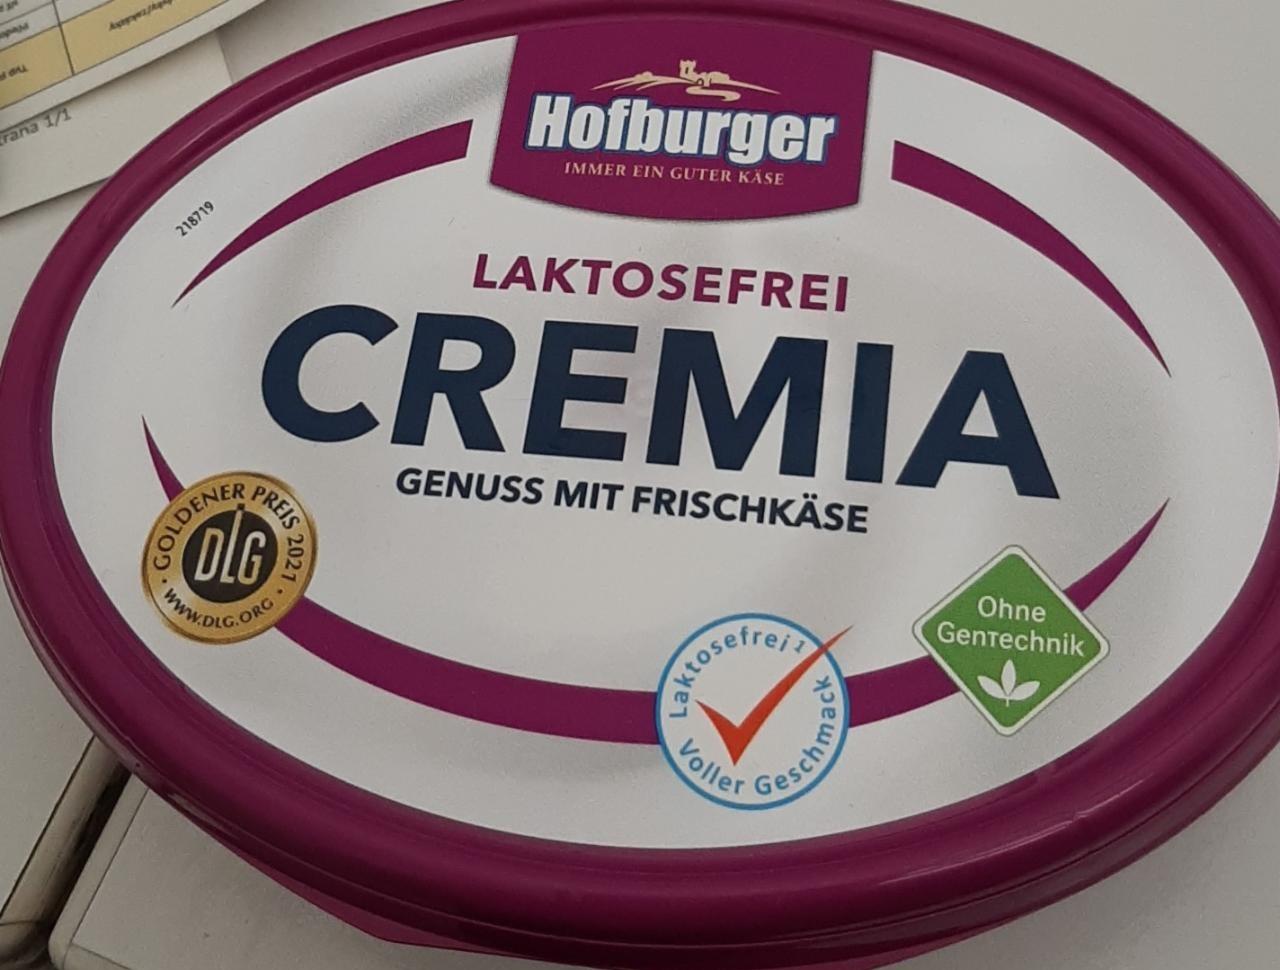 Fotografie - Cremia laktosefrei Genuss mit Frischkäse Hofburger